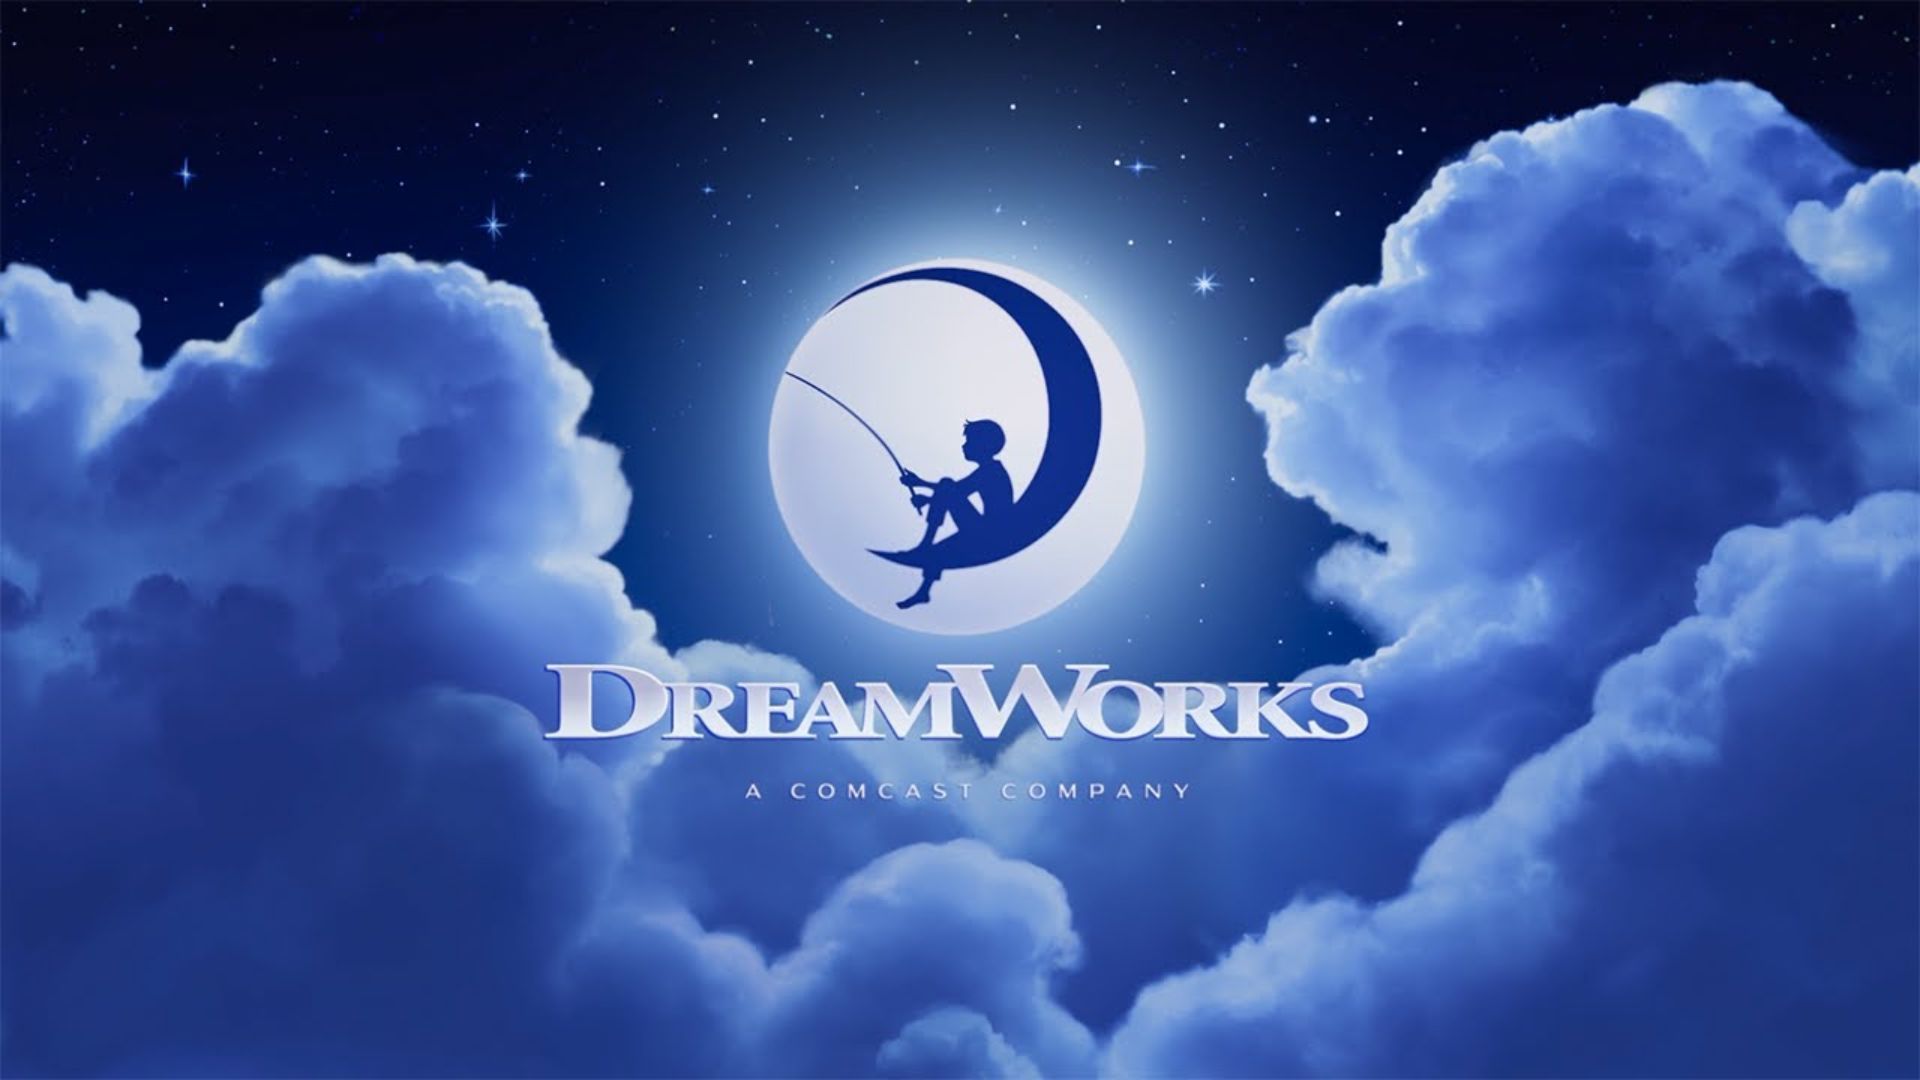 dreamworks animation nuevo logo secuencia intro (3)